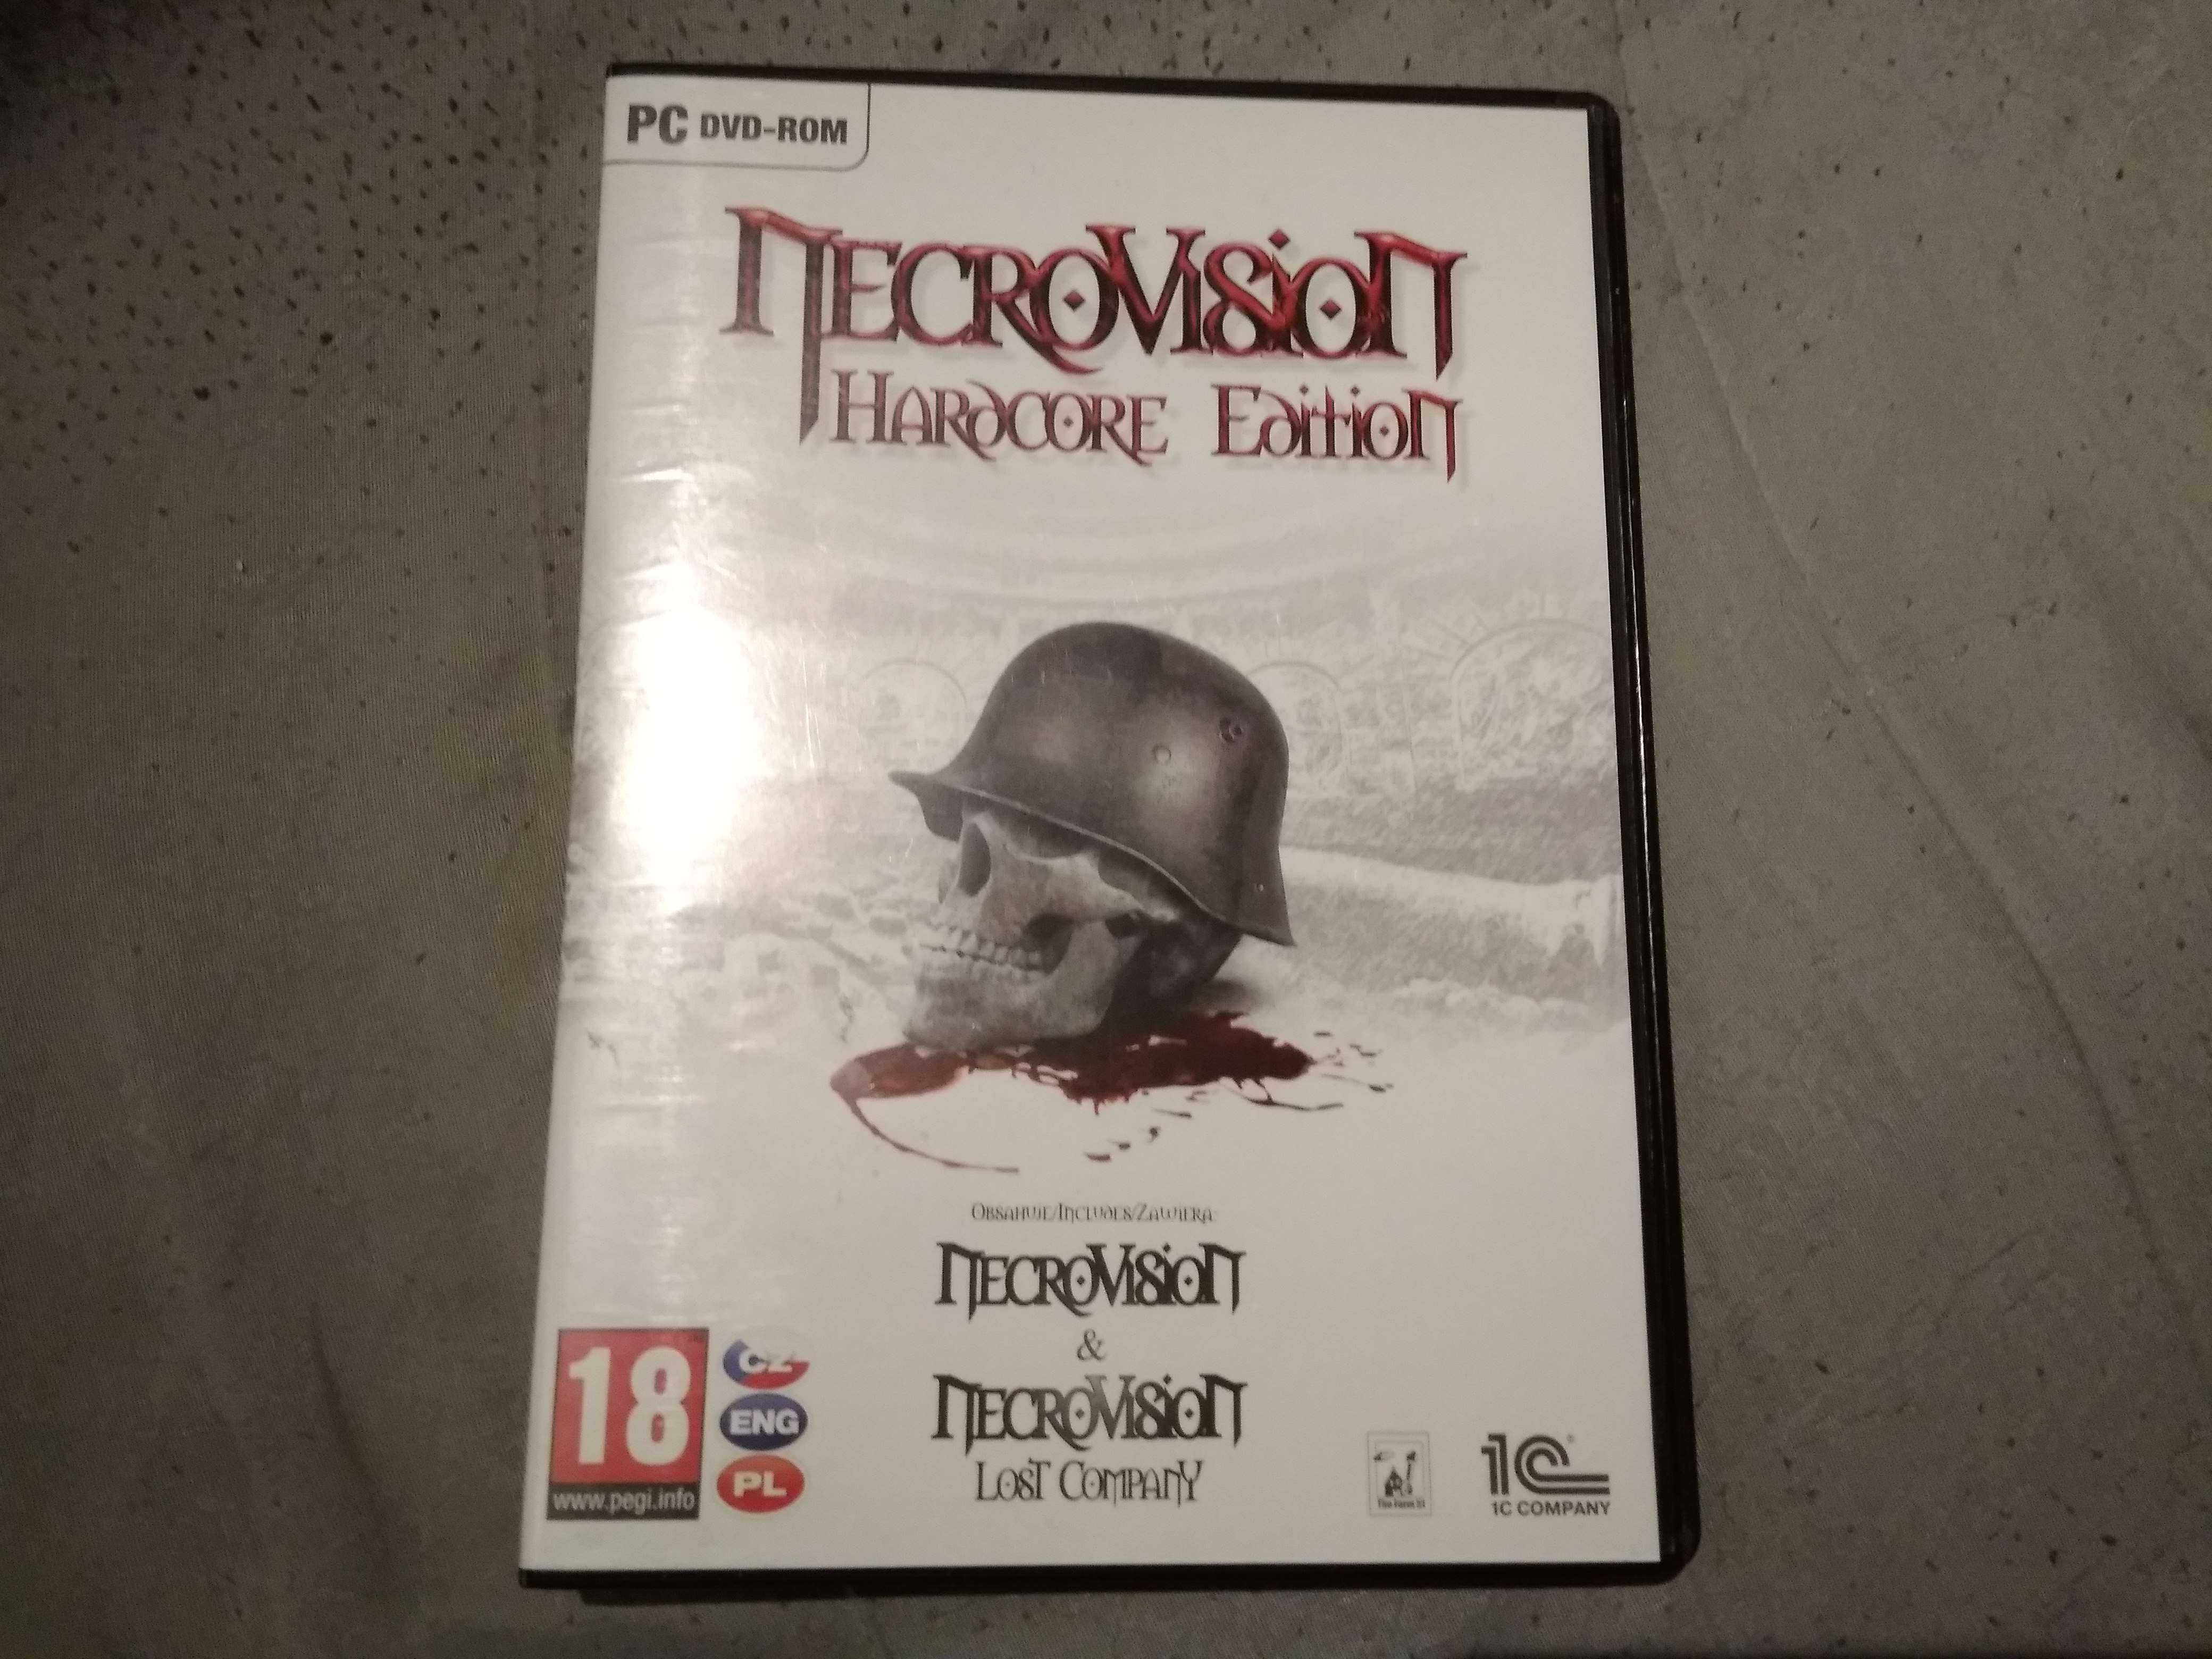 Necrovision Hardcore Edition PC